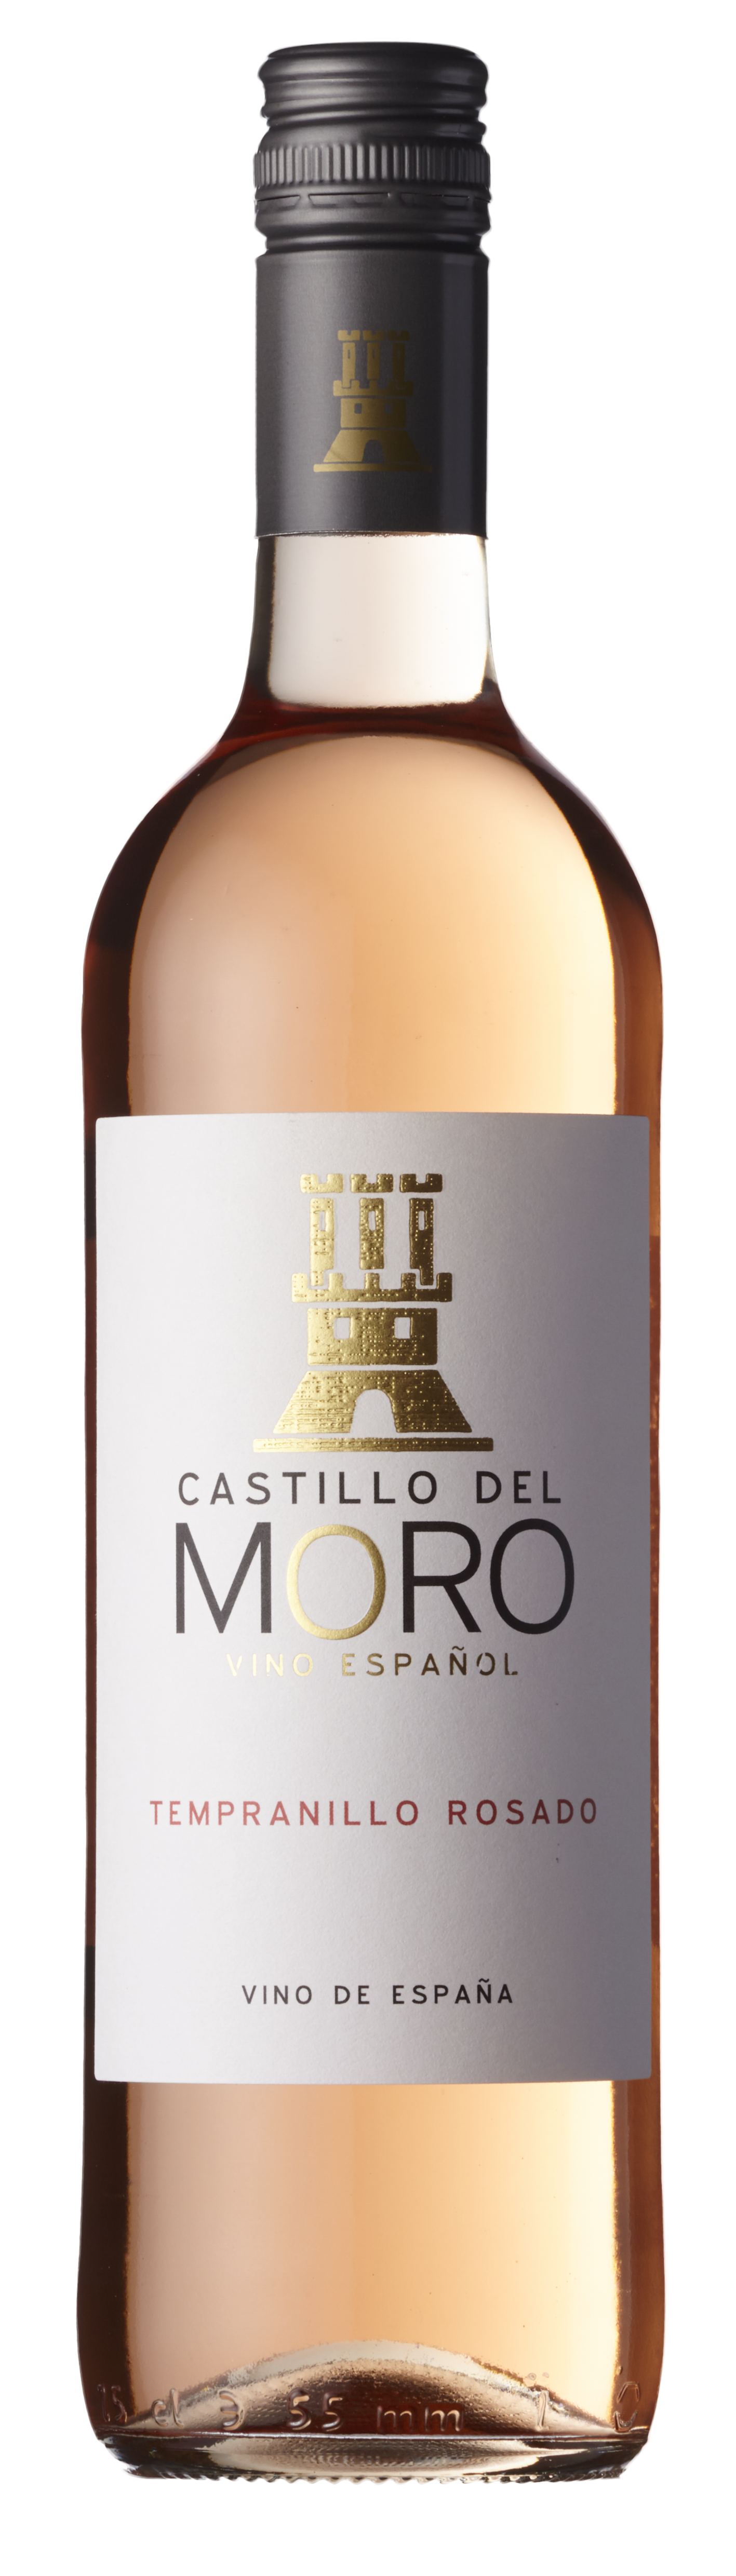 Bottle shot - Castillo del Moro, Tempranillo, Rosado, Vino de España, Spain